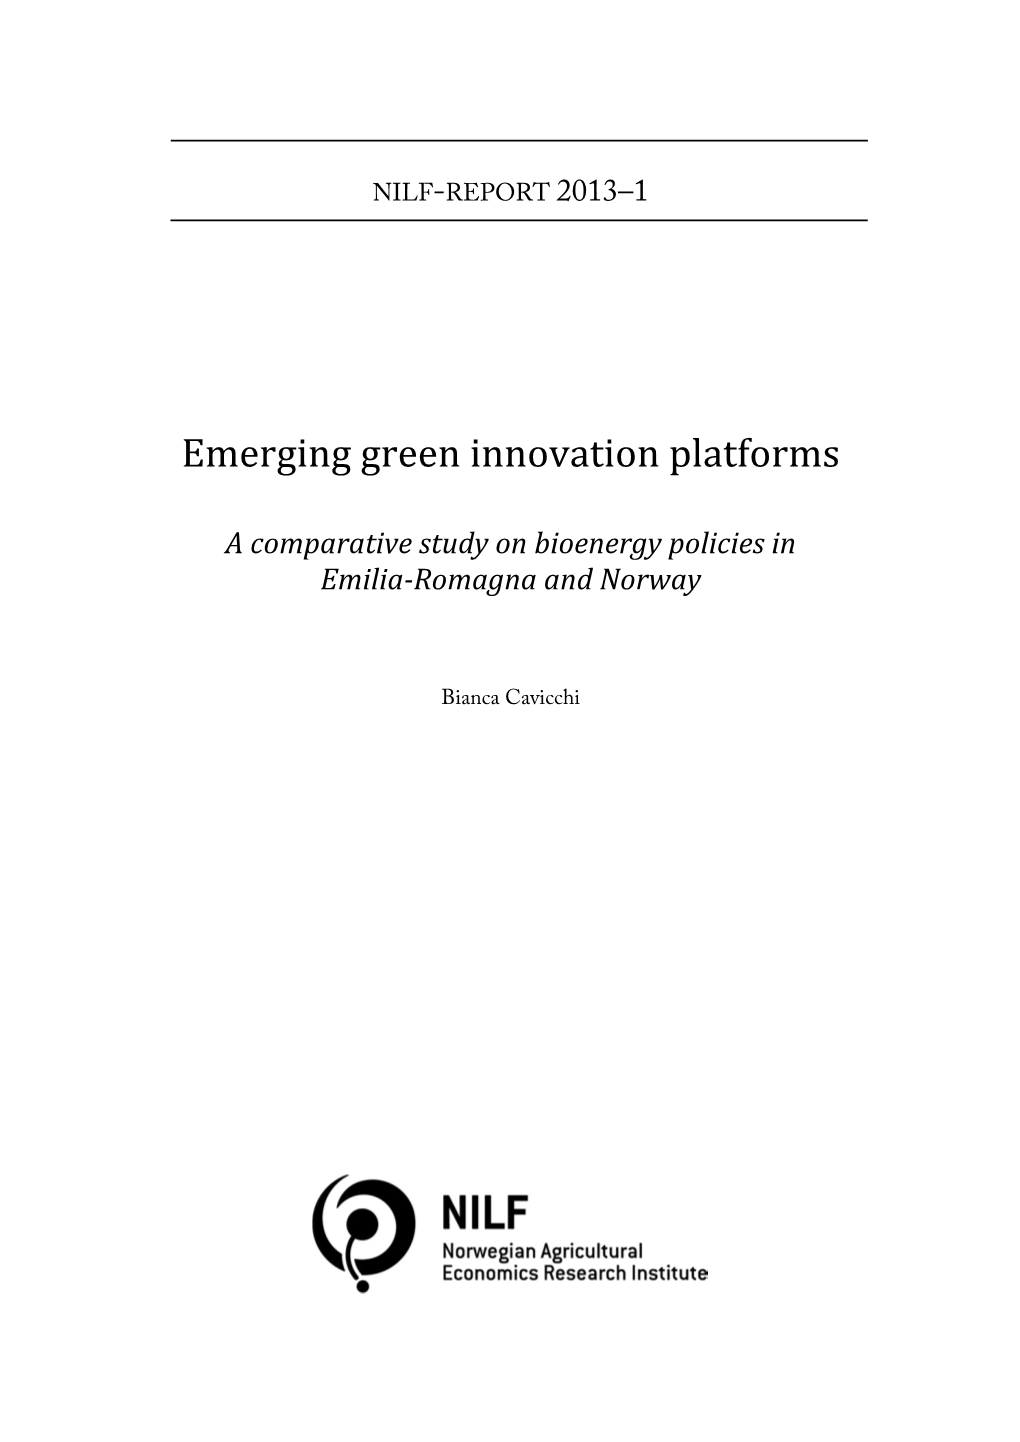 Emerging Green Innovation Platforms